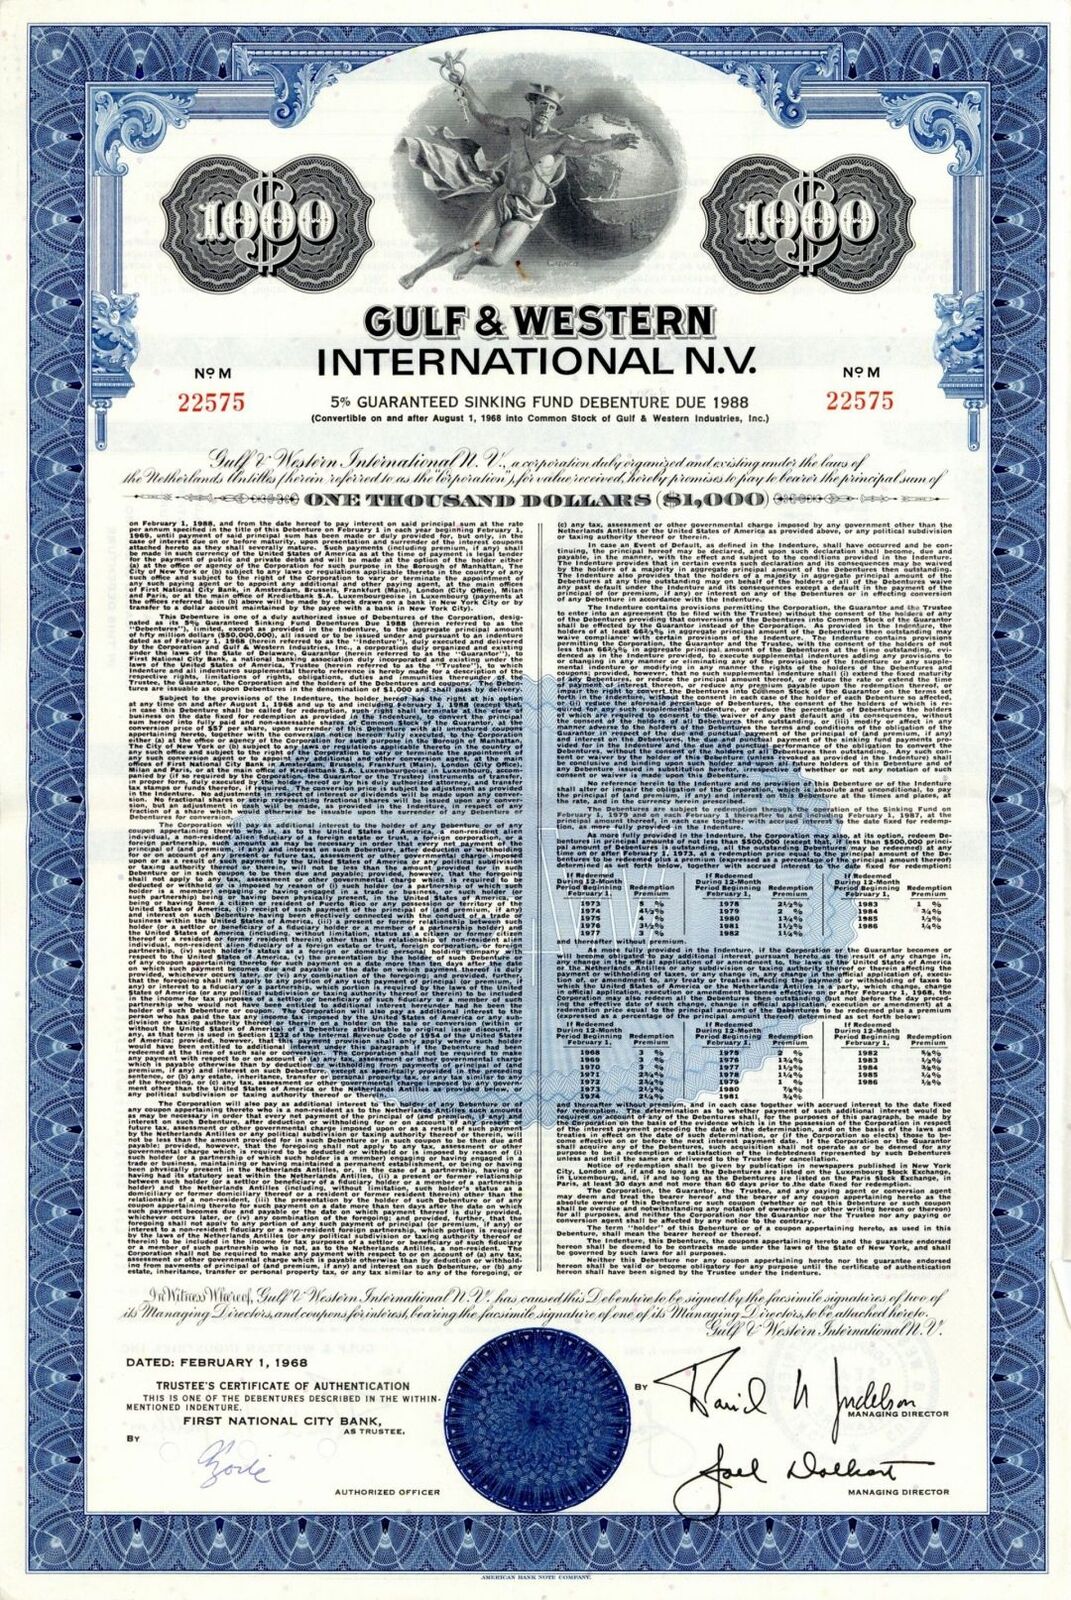 Gulf and Western International N.V. - dated 1968 Netherlands $1,000 Sinking Fund